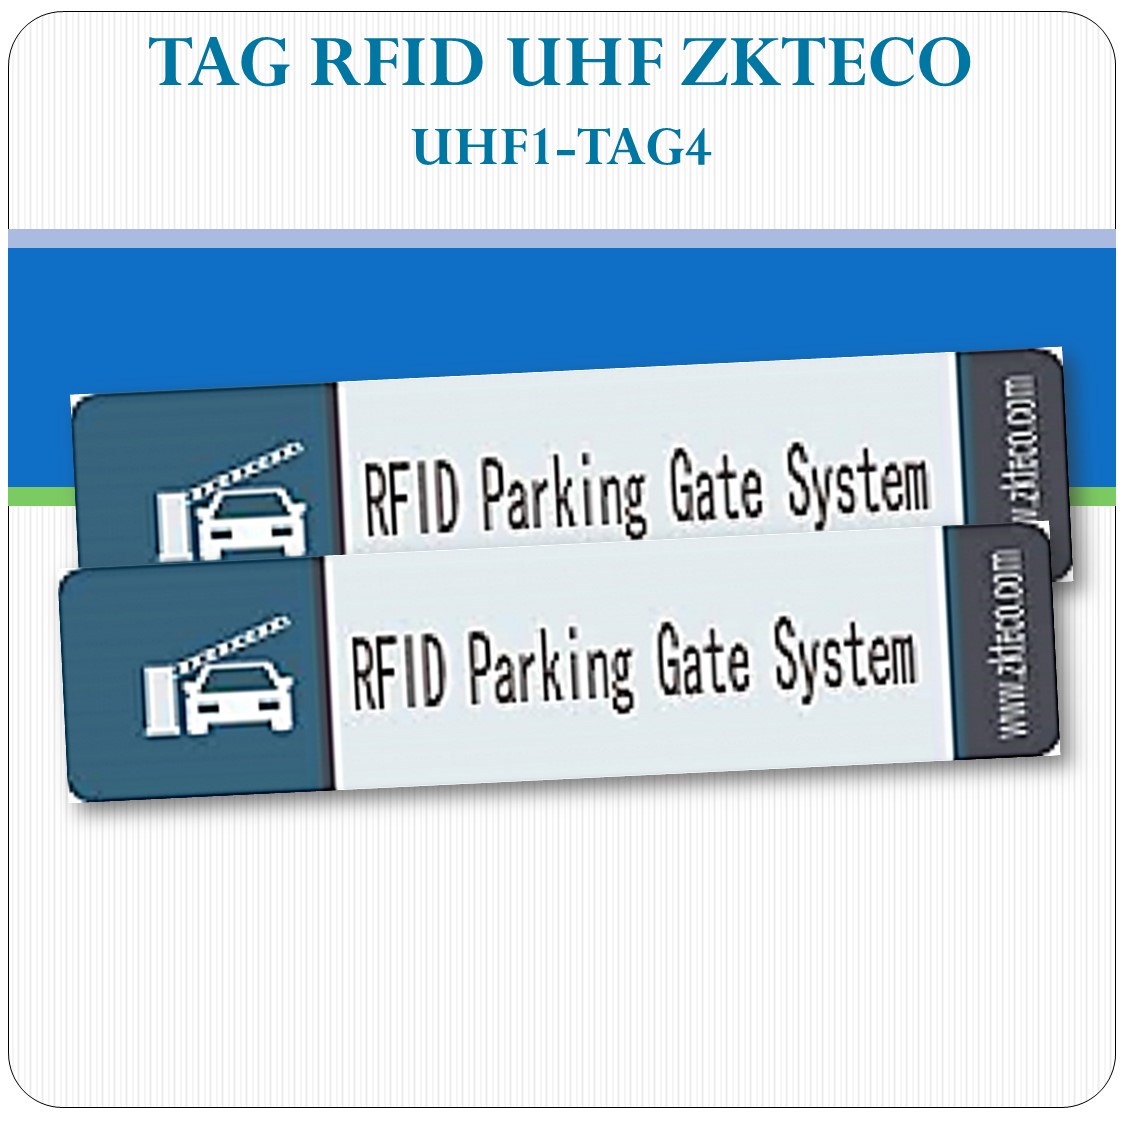 Tag Etiqueta RFID UHF Veicular ZKTeco - UHF1 TAG4